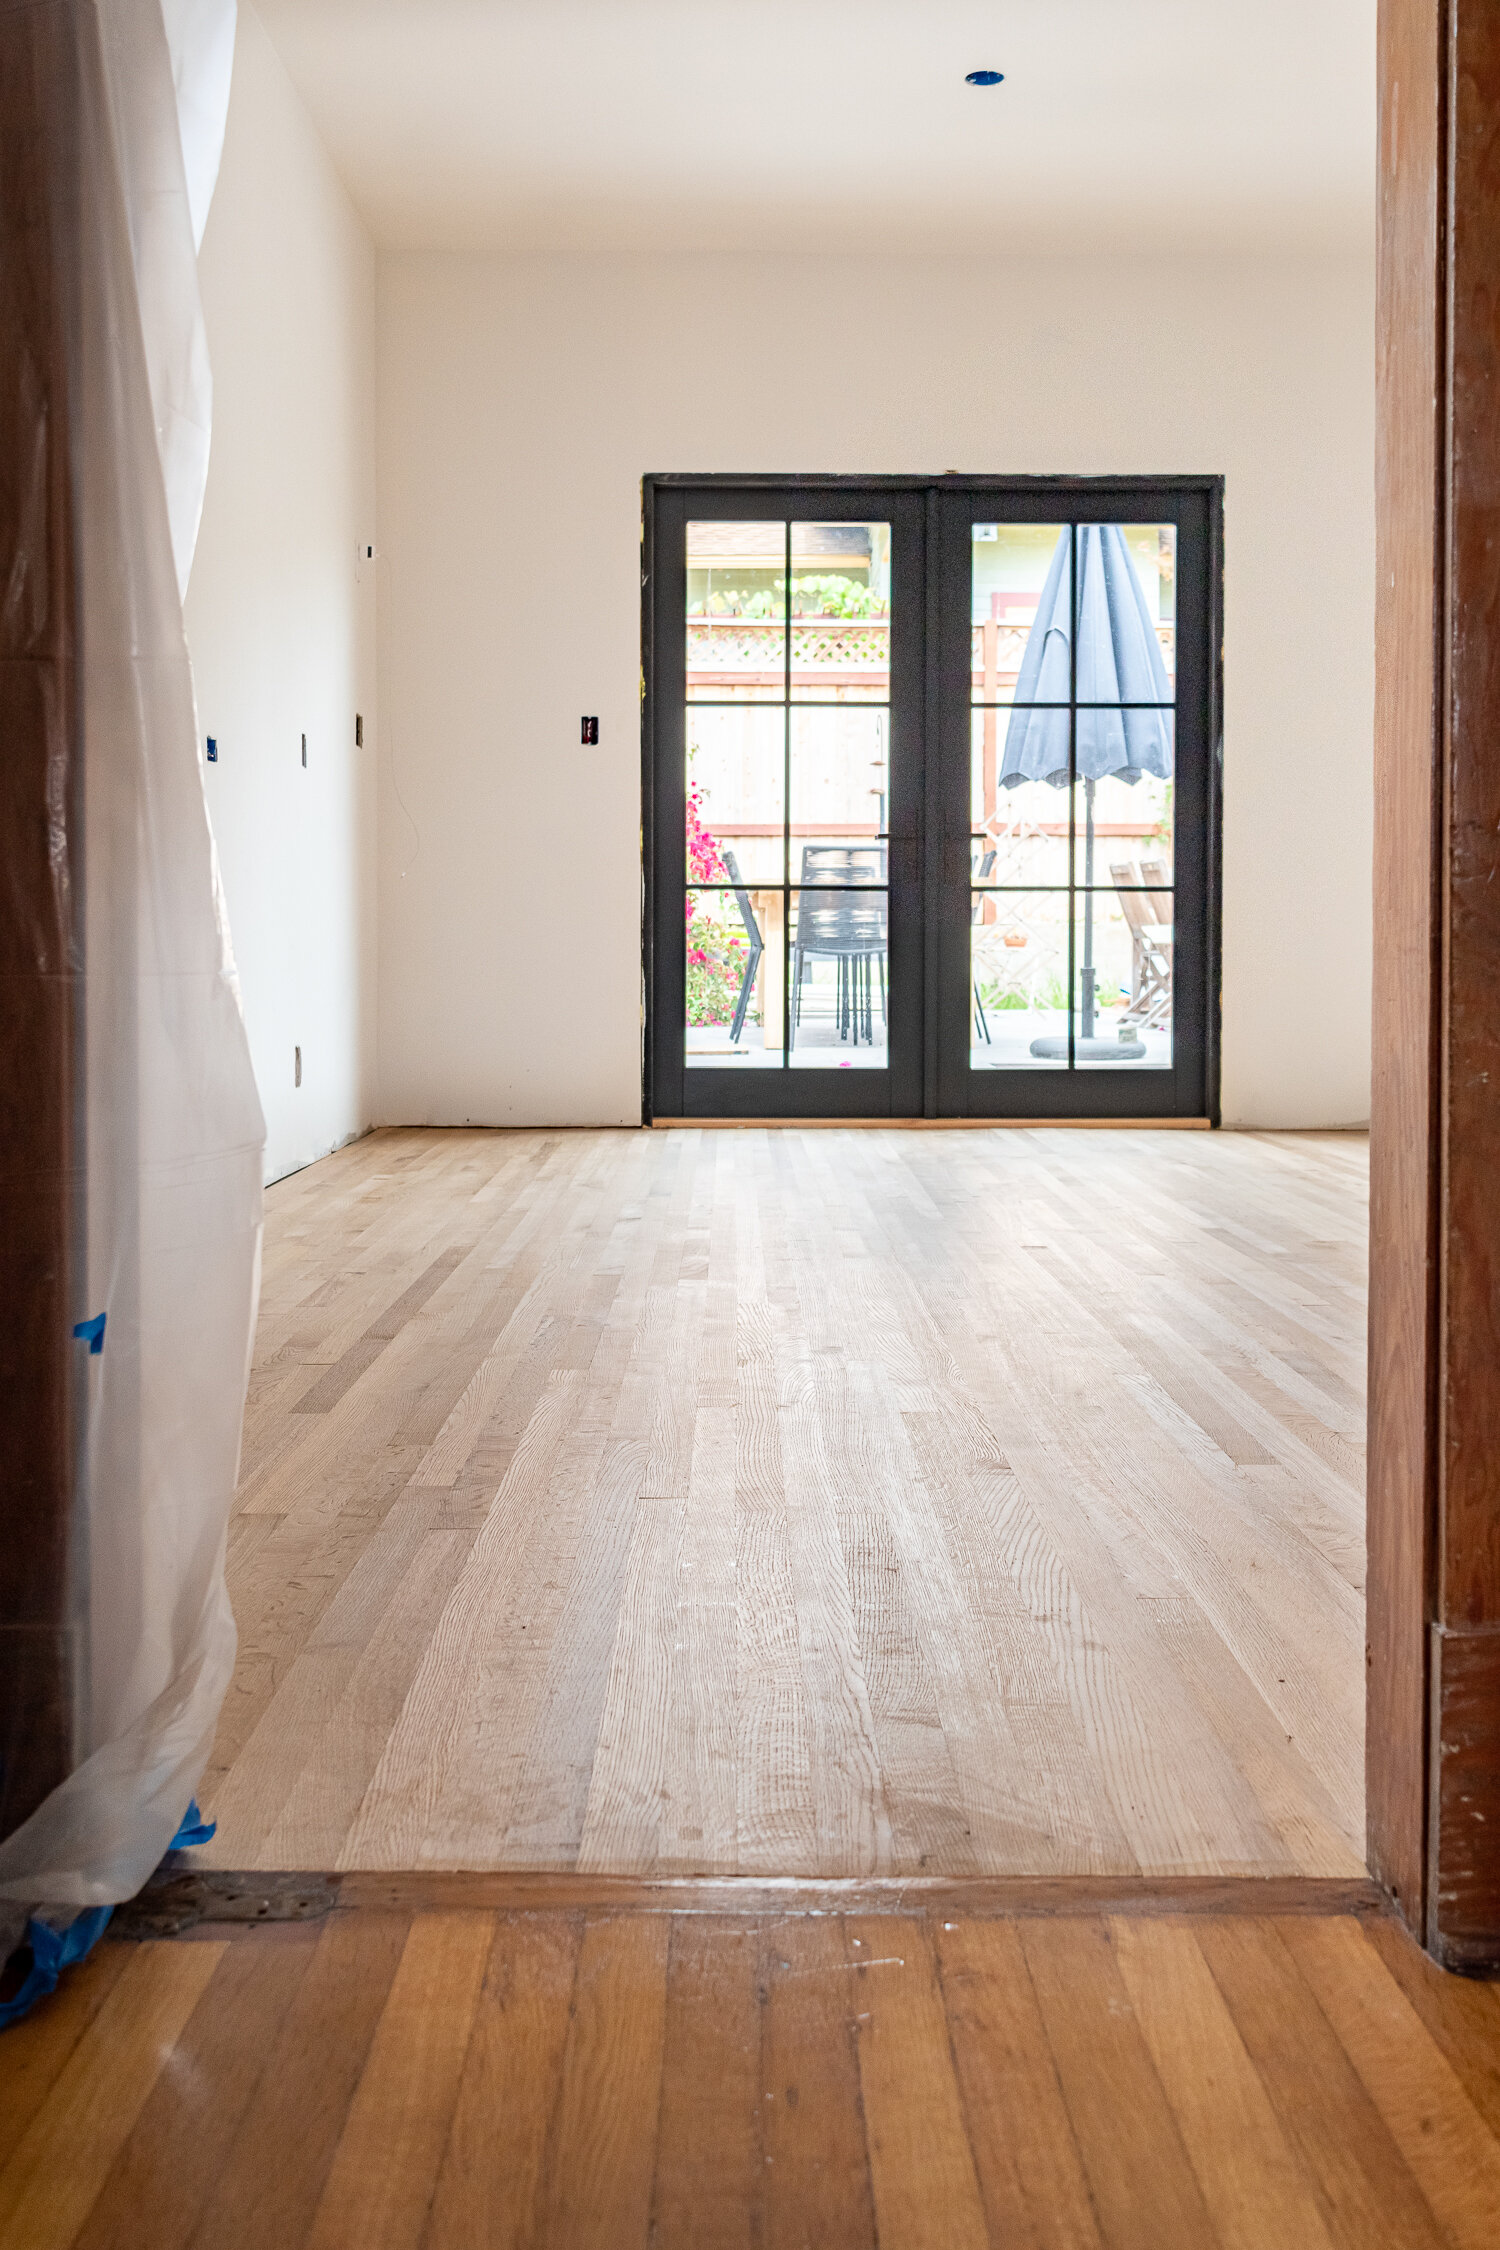 Installing New Hardwood Floors In Our, Local Hardwood Floor Installers